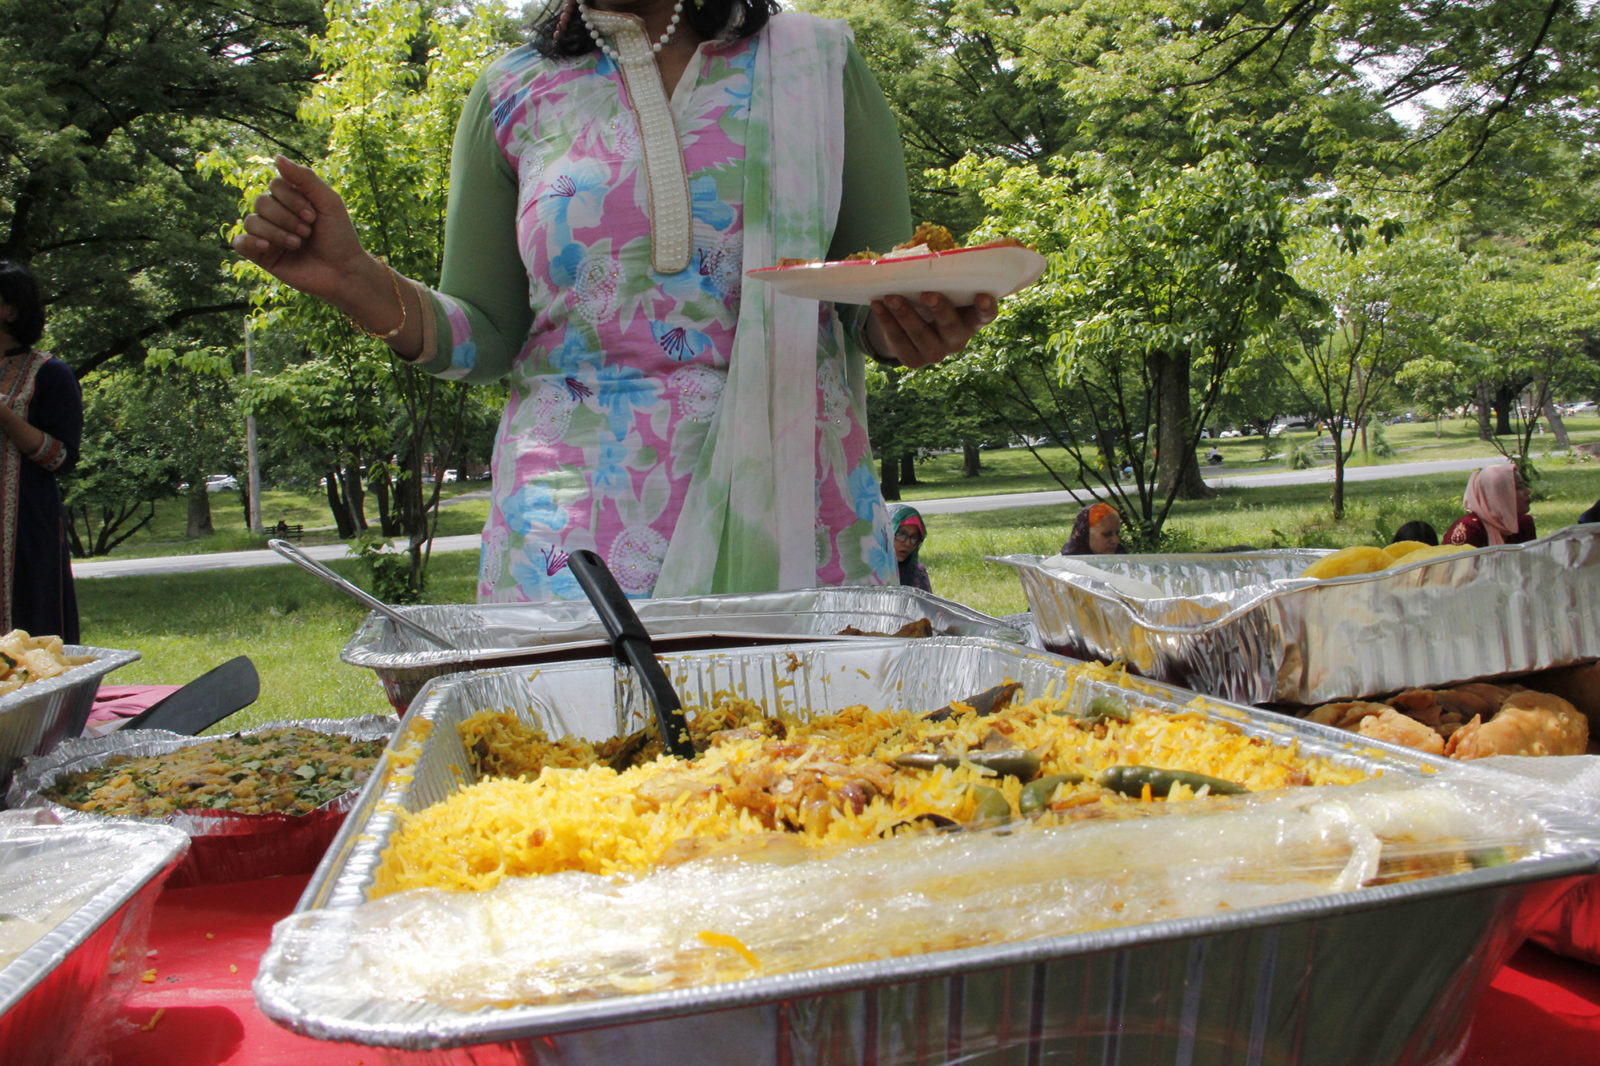 A photo of a woman at selecting food at an outdoor gathering